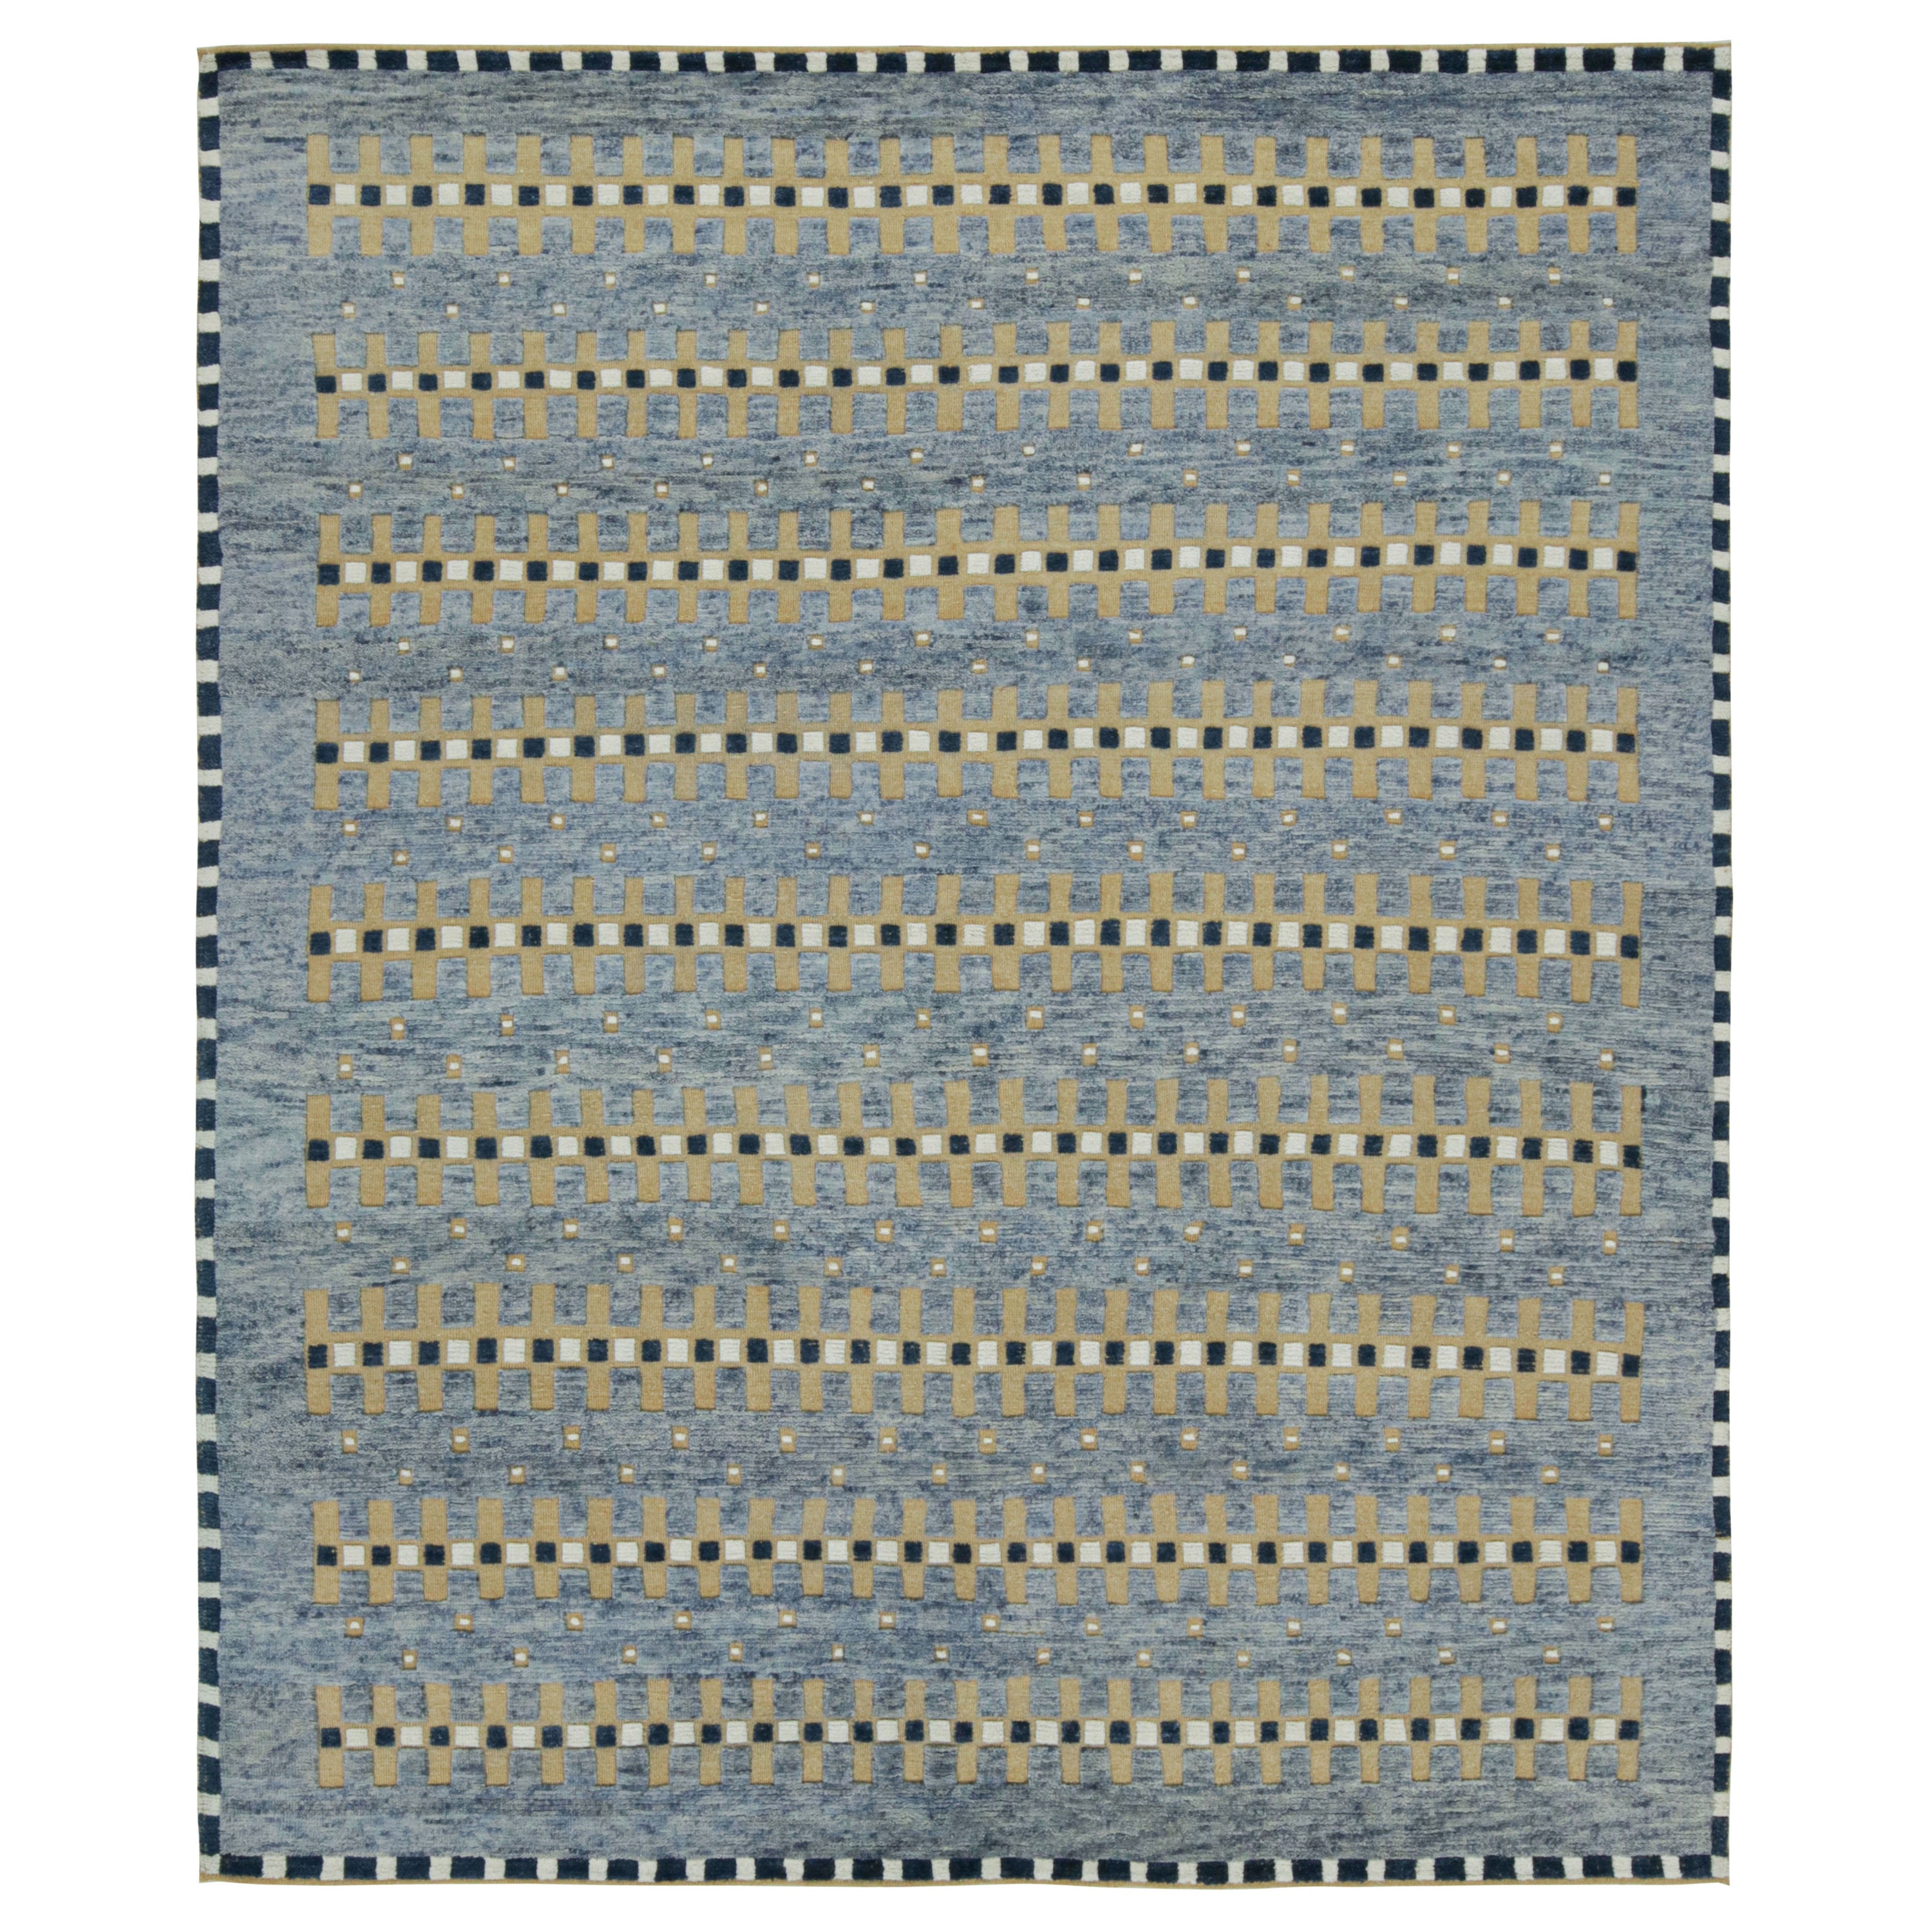 Rug & Kilim’s Scandinavian Style Rug in Blue, Beige-Brown Geometric Patterns For Sale